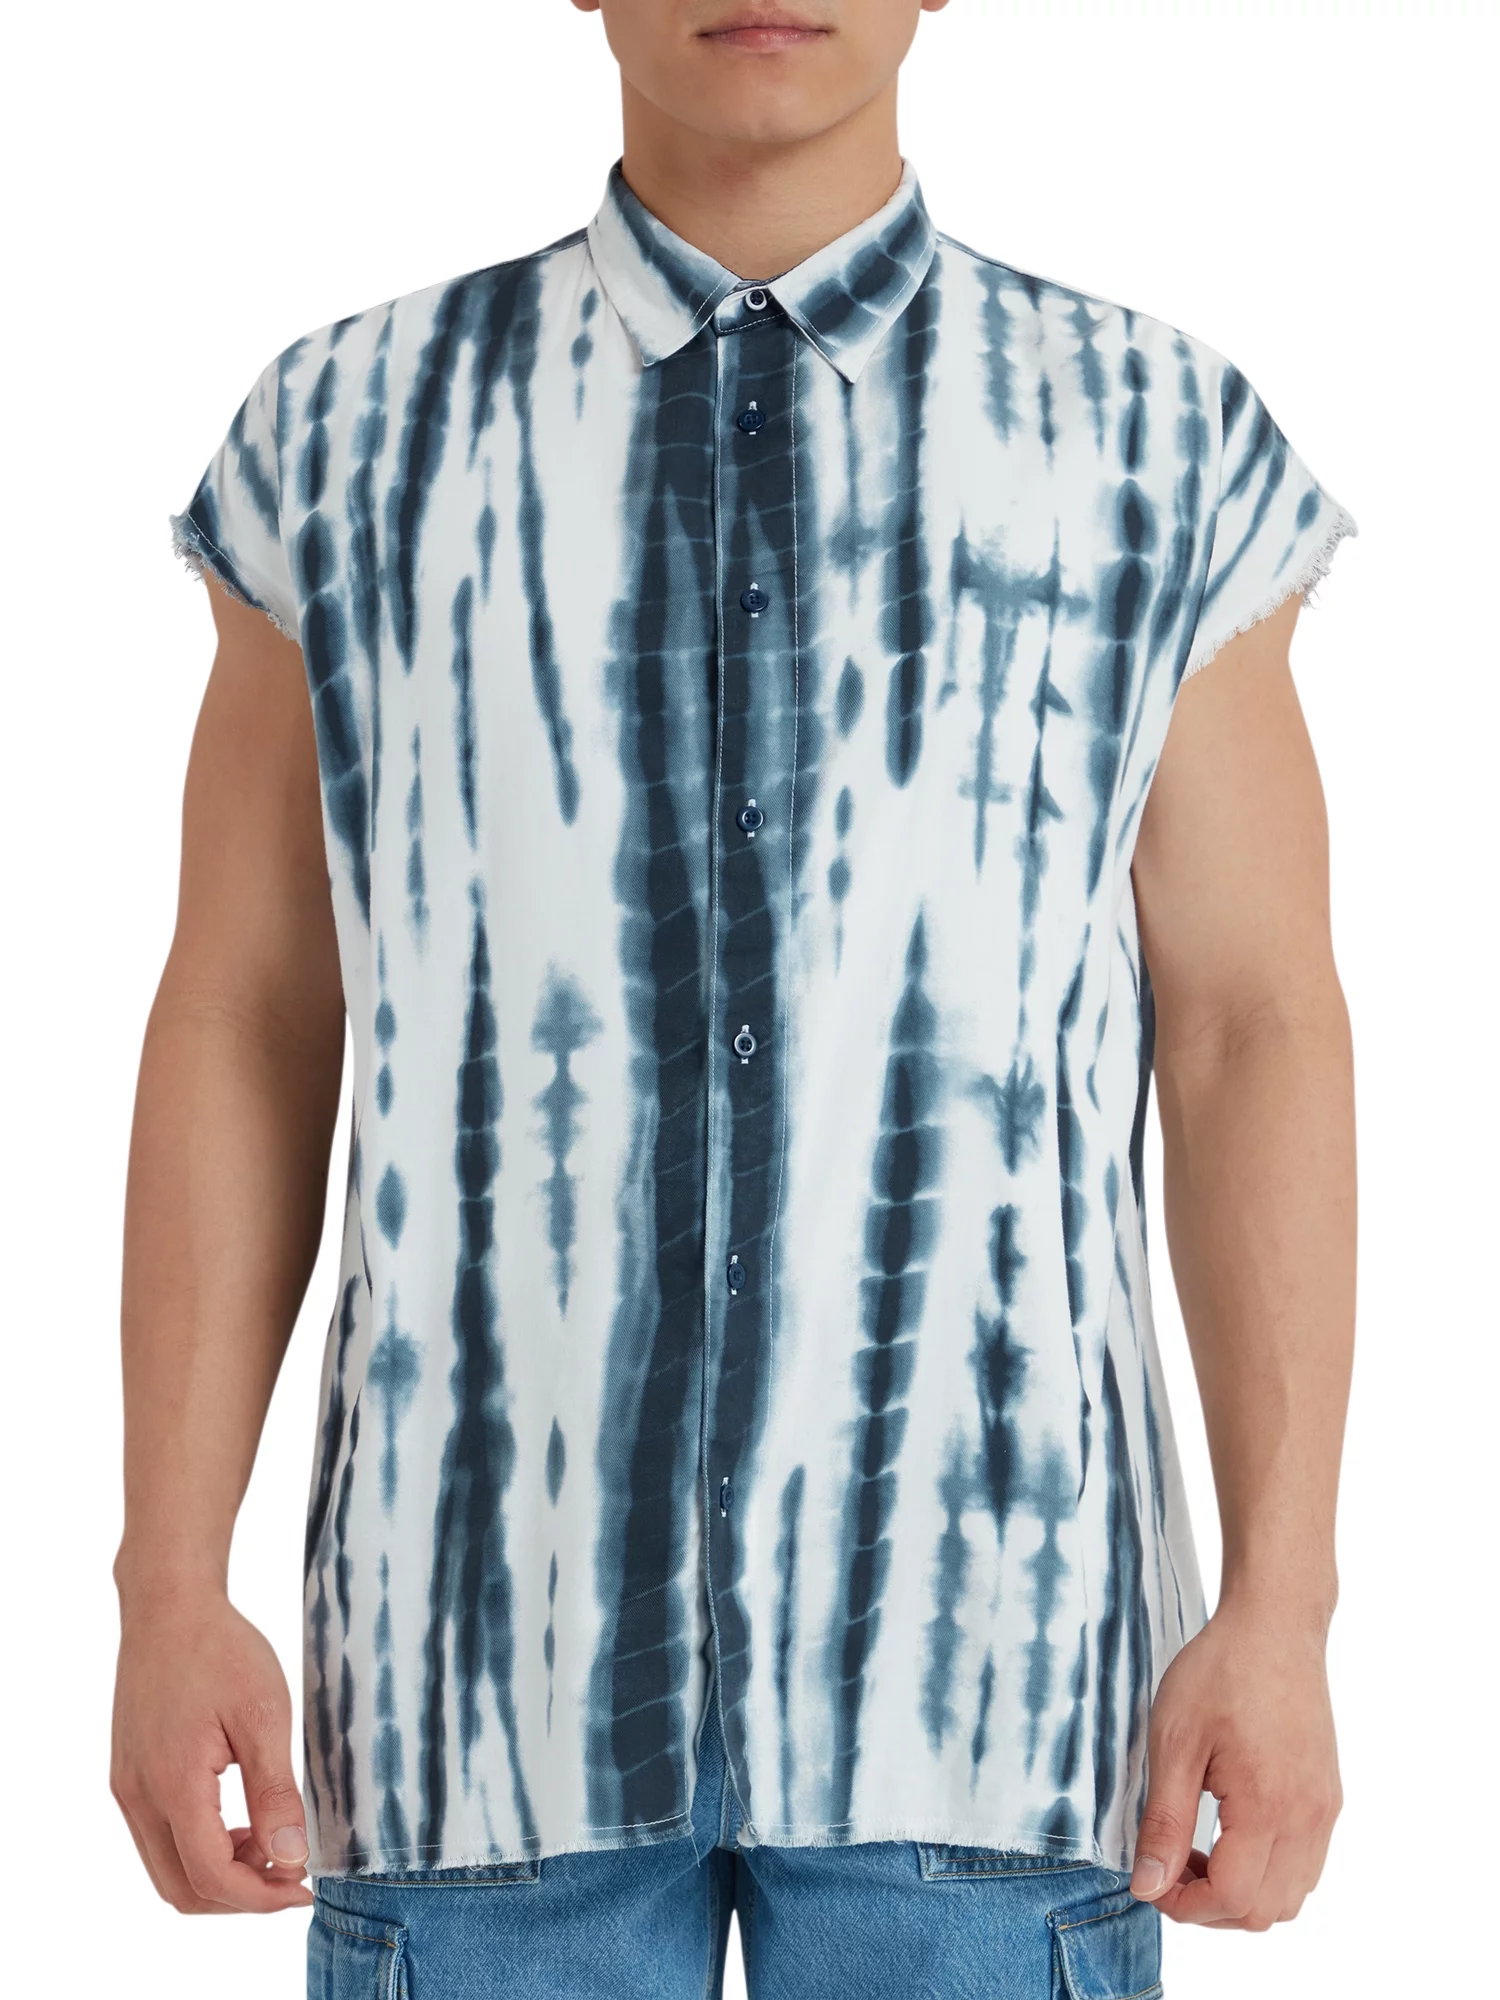 EPIC Studio Men's & Big Men's Sleeveless Cotton Rayon Resort Shirt, Sizes S-5XL, Mens Shirts